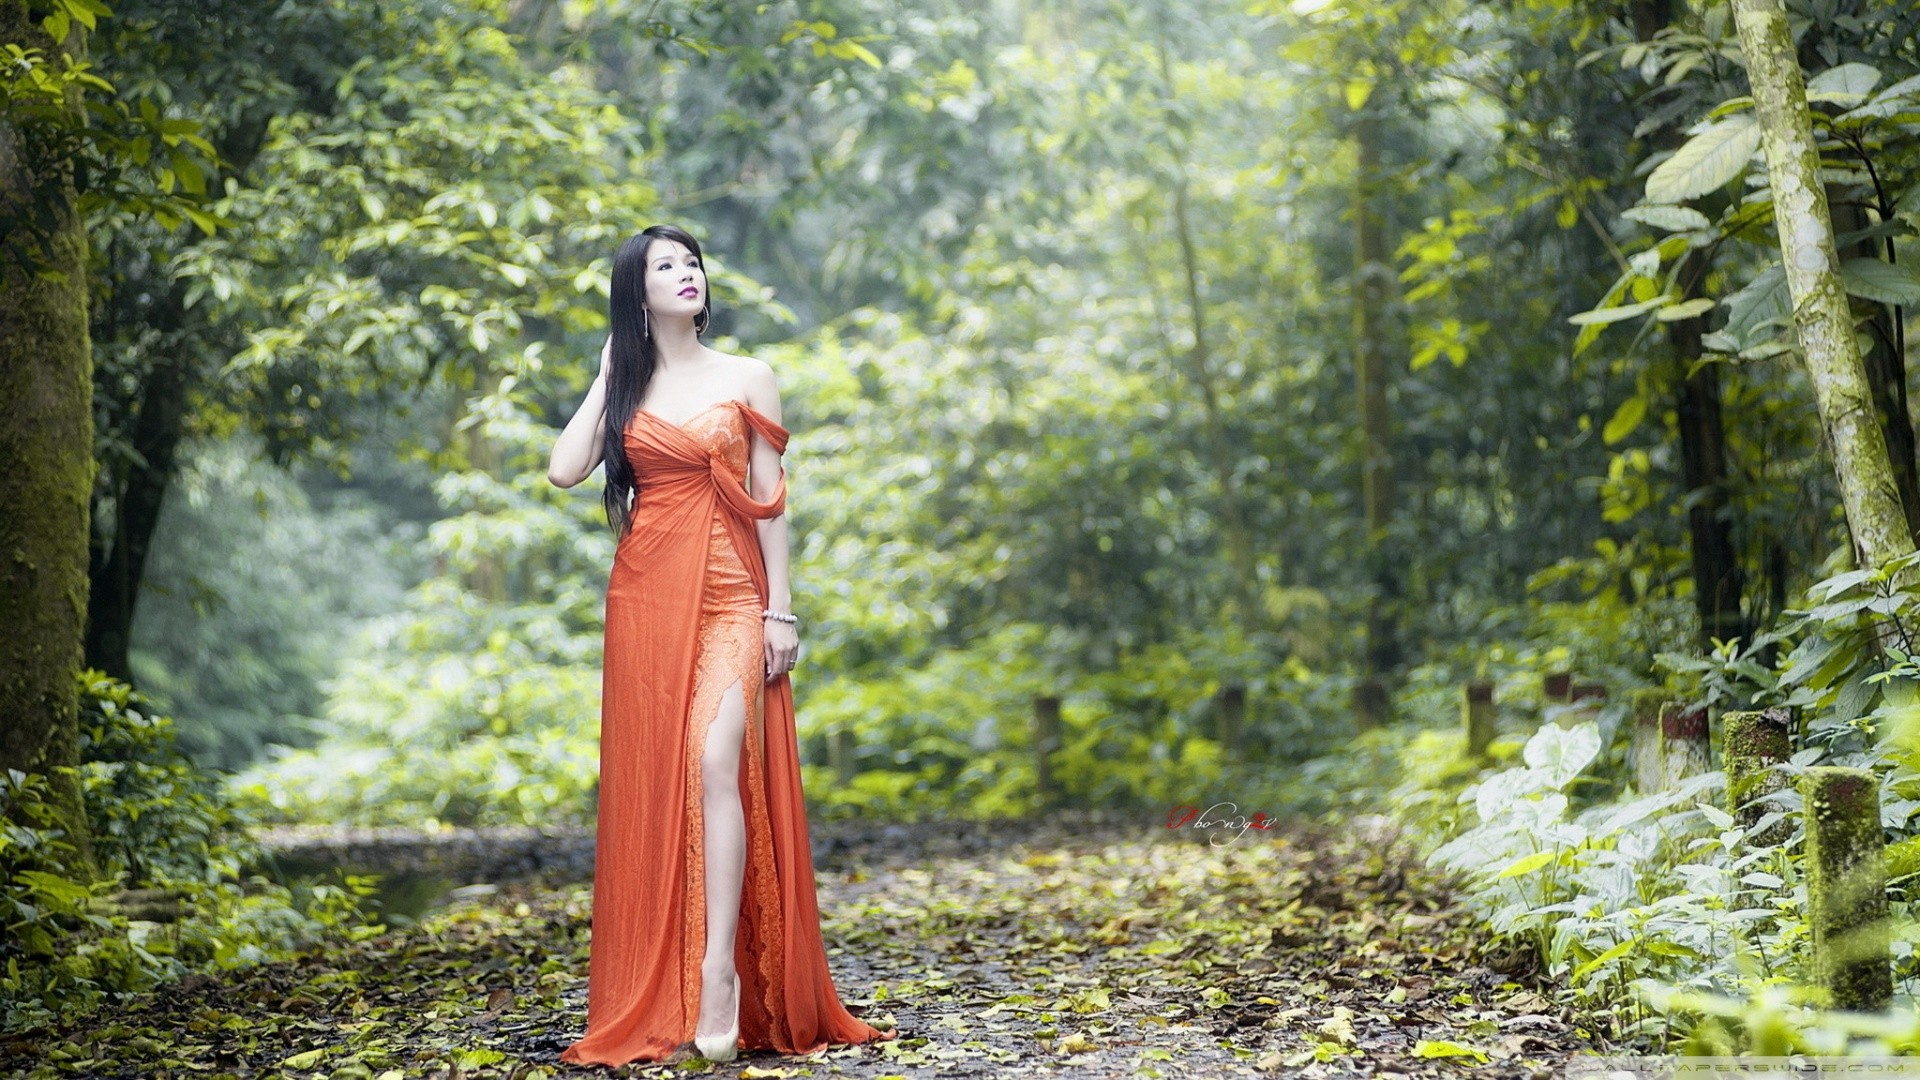 Asian Women Women Outdoors Orange Dress High Cut Dress Bare Shoulders Looking Into The Distance 1920x1080